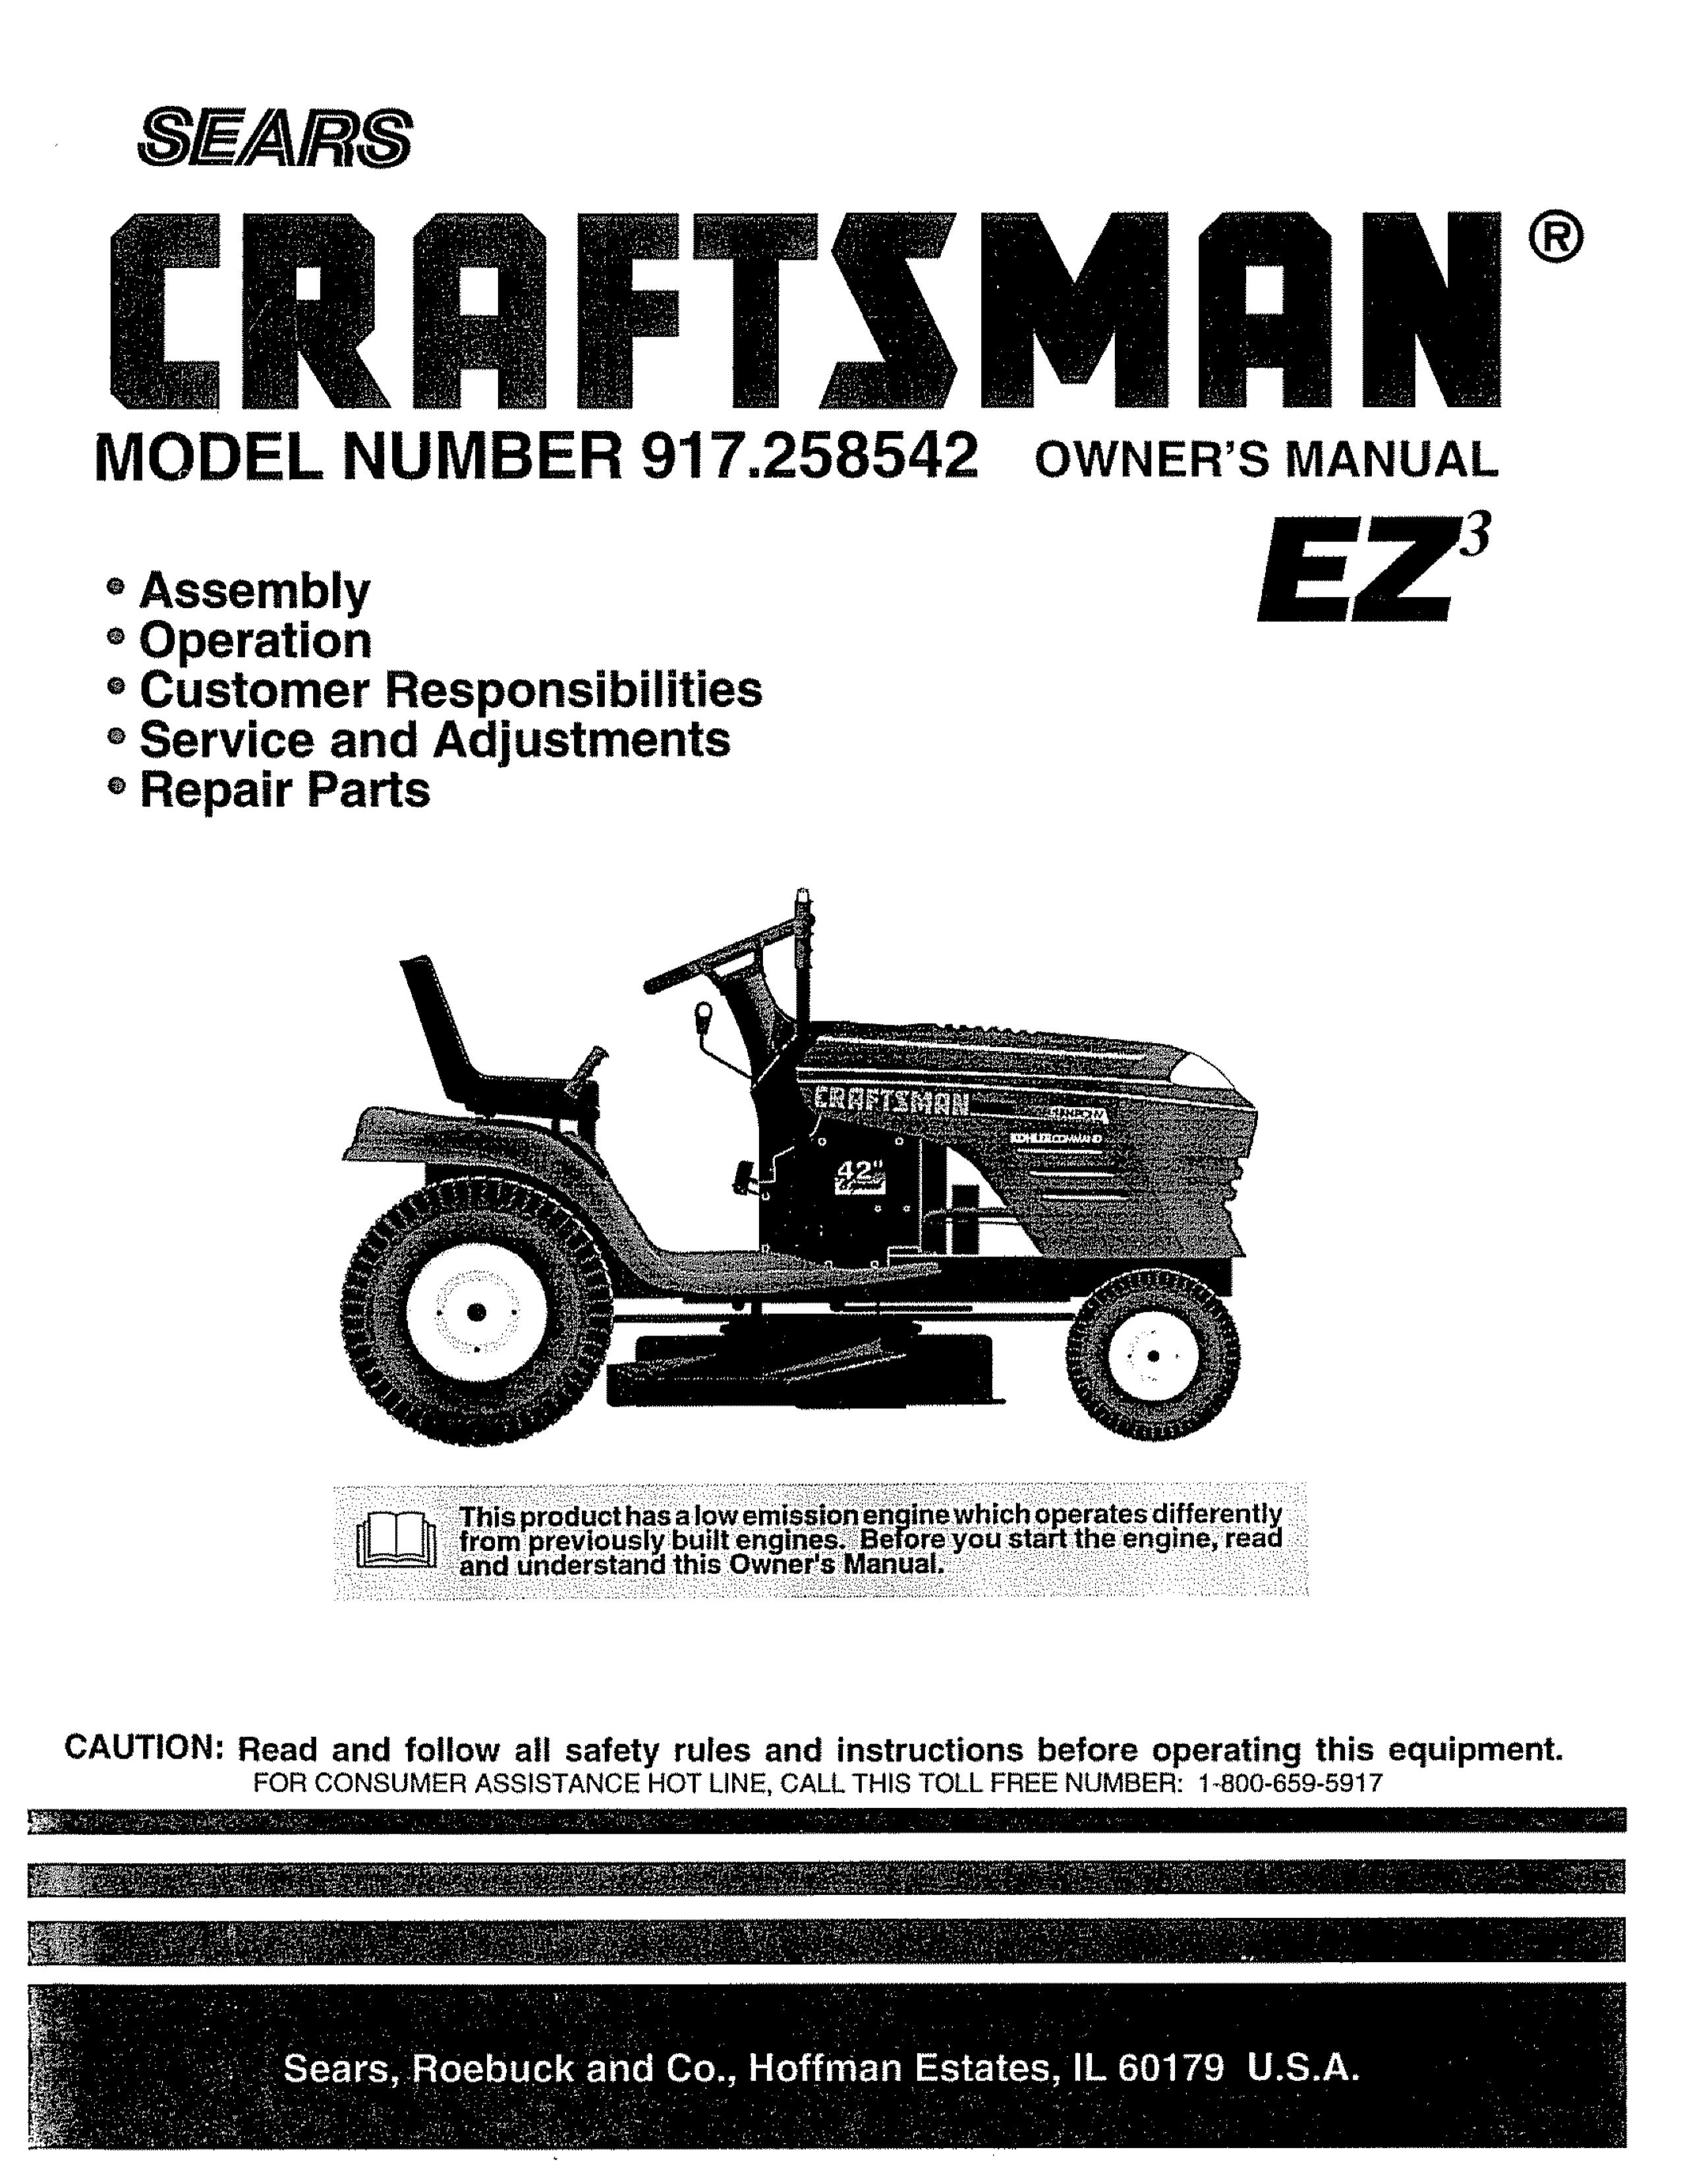 Sears 917.258542 Lawn Mower User Manual